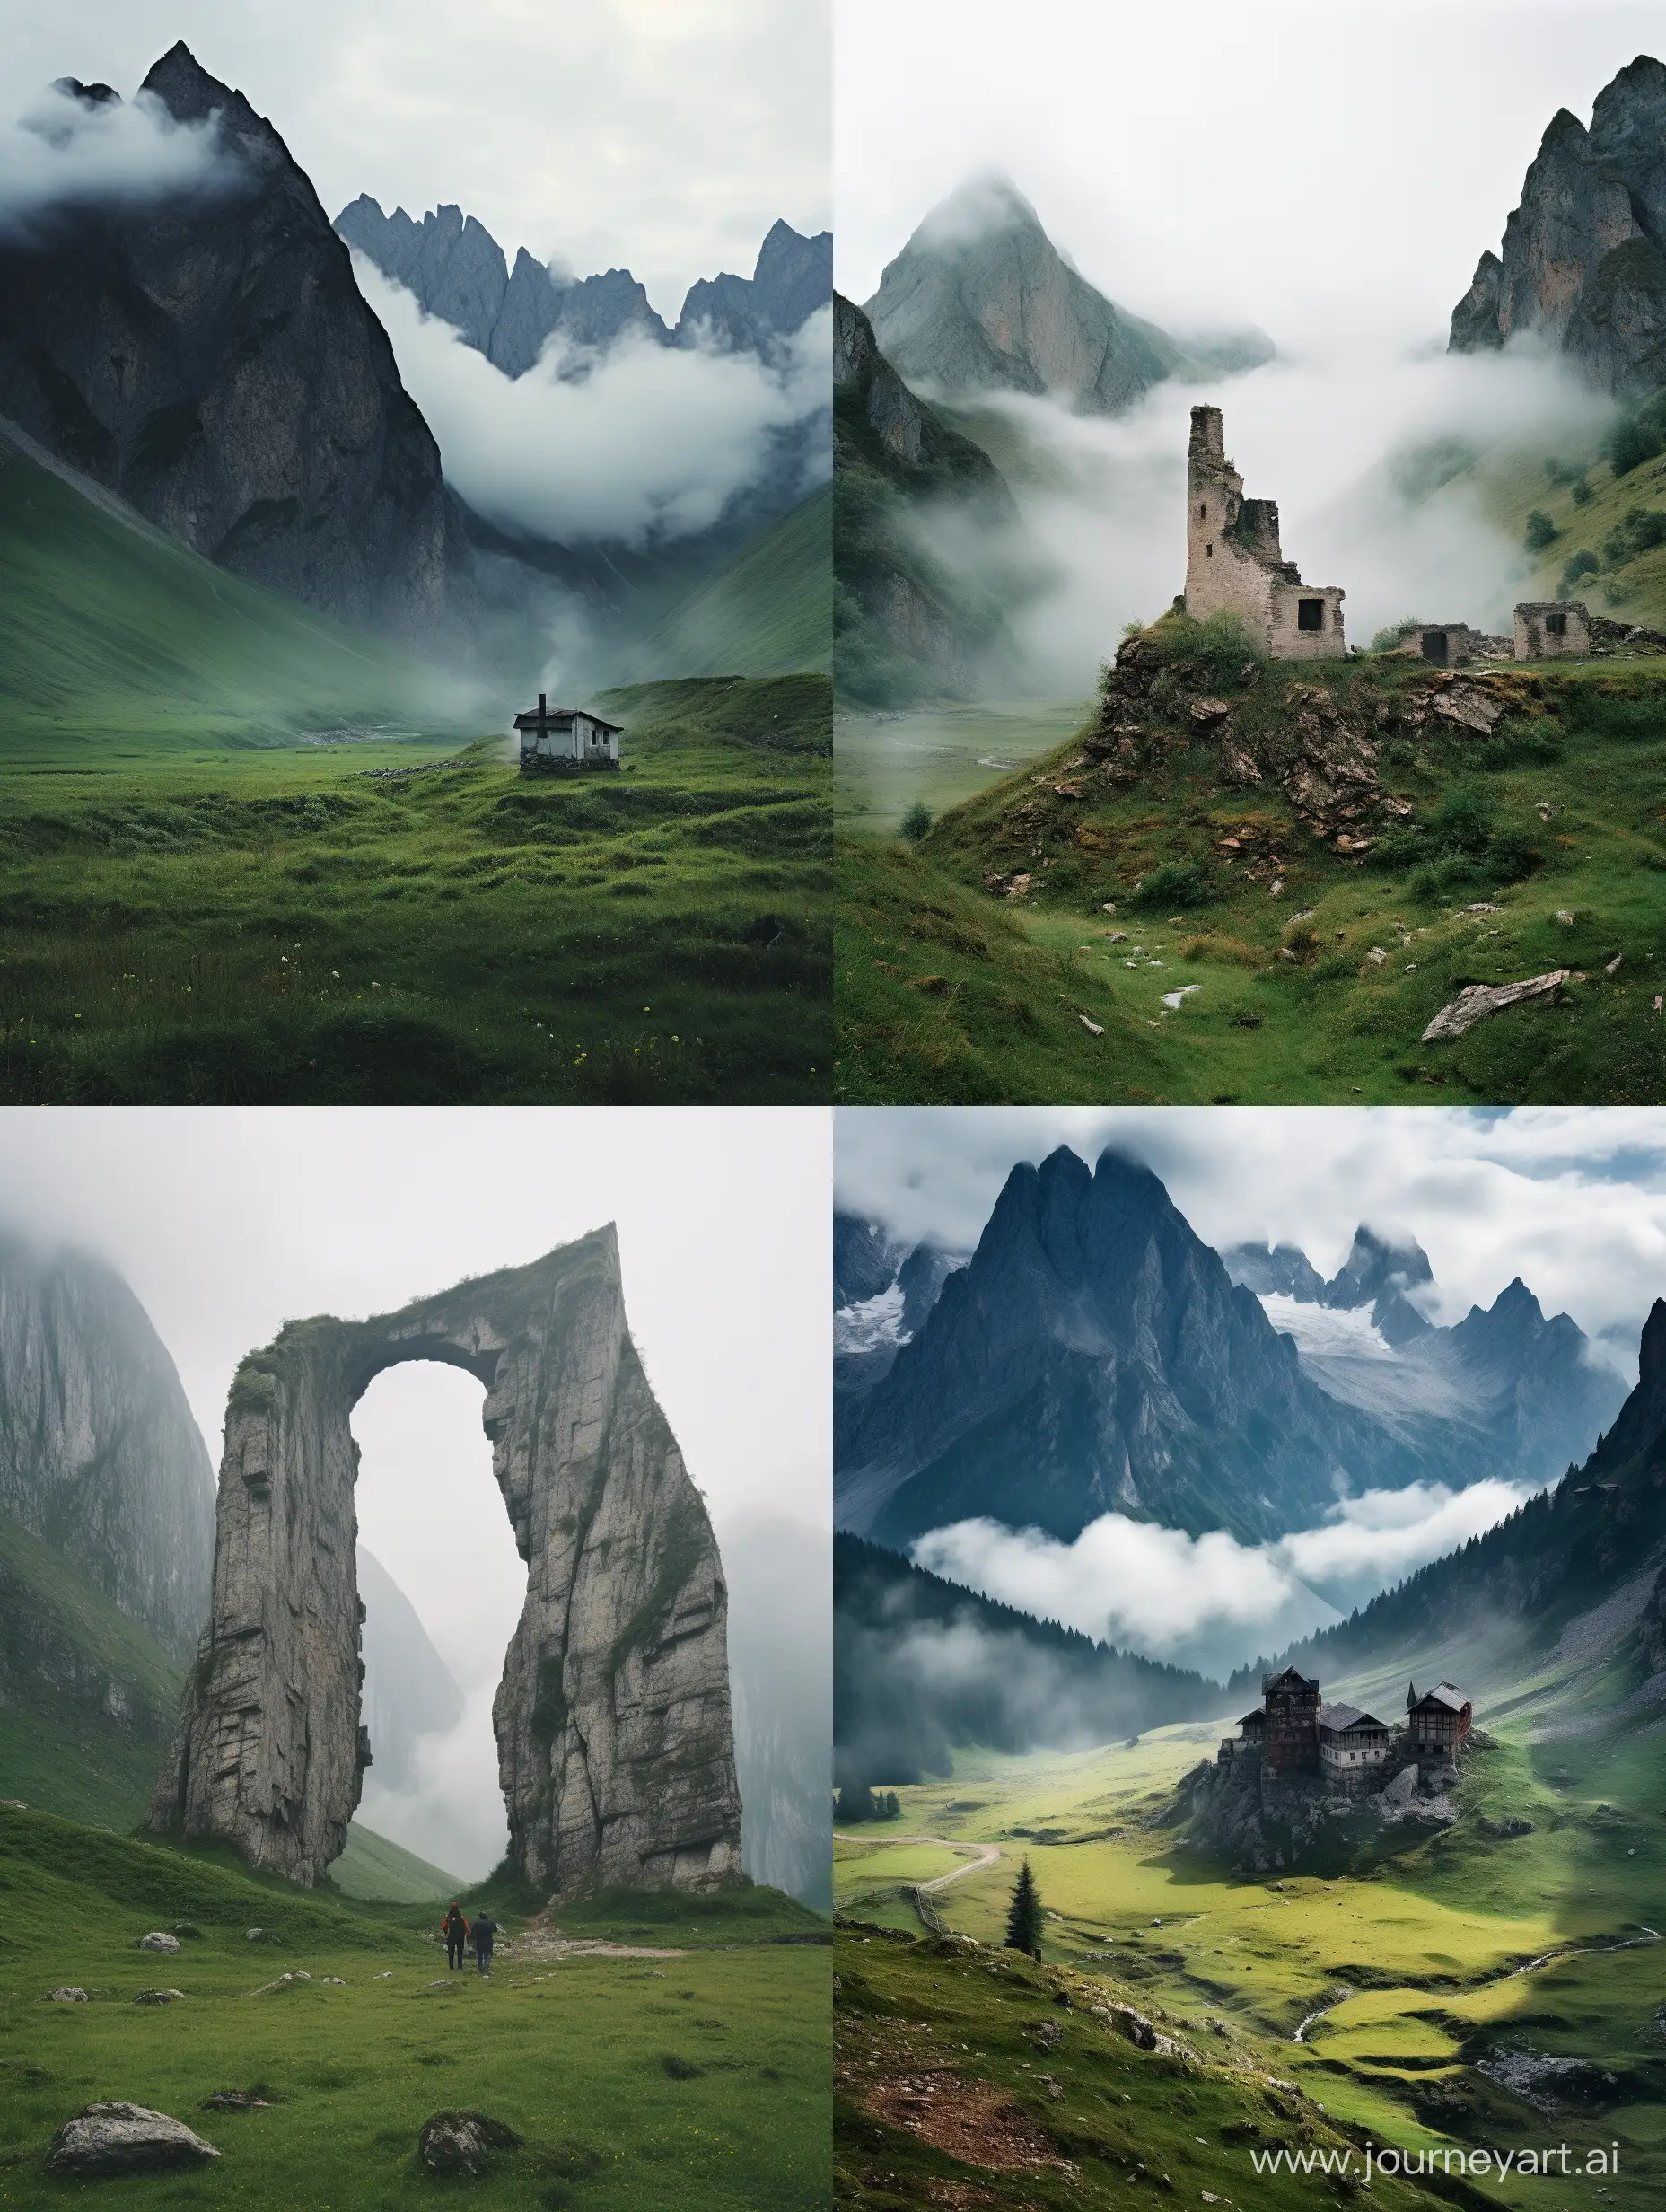 Enchanting-North-OssetiaAlania-Landscape-at-34-Aspect-Ratio